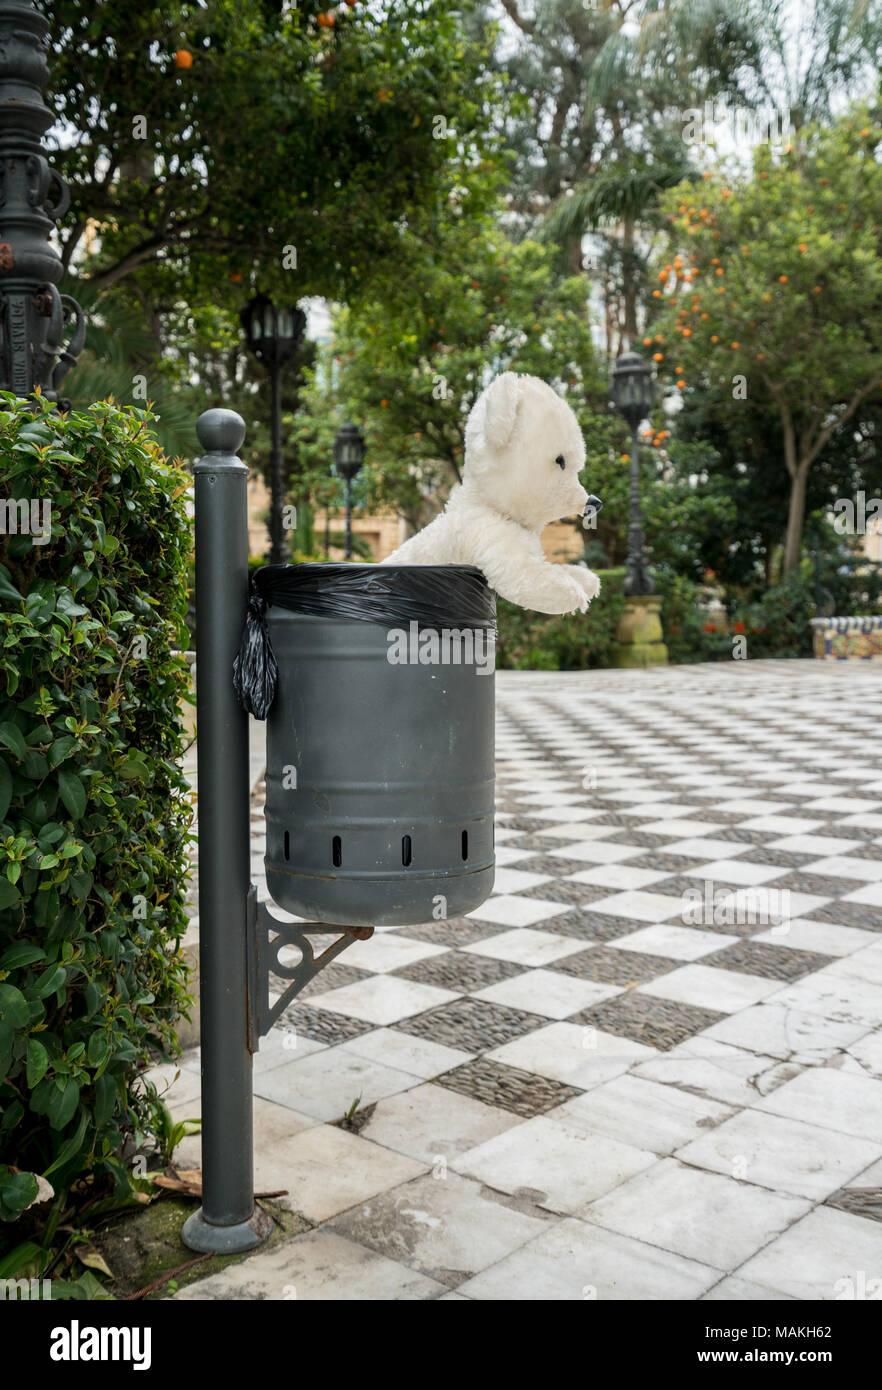 Weißer Teddybär innen Abfallbehälter, Cadiz, Südspanien Stockfoto